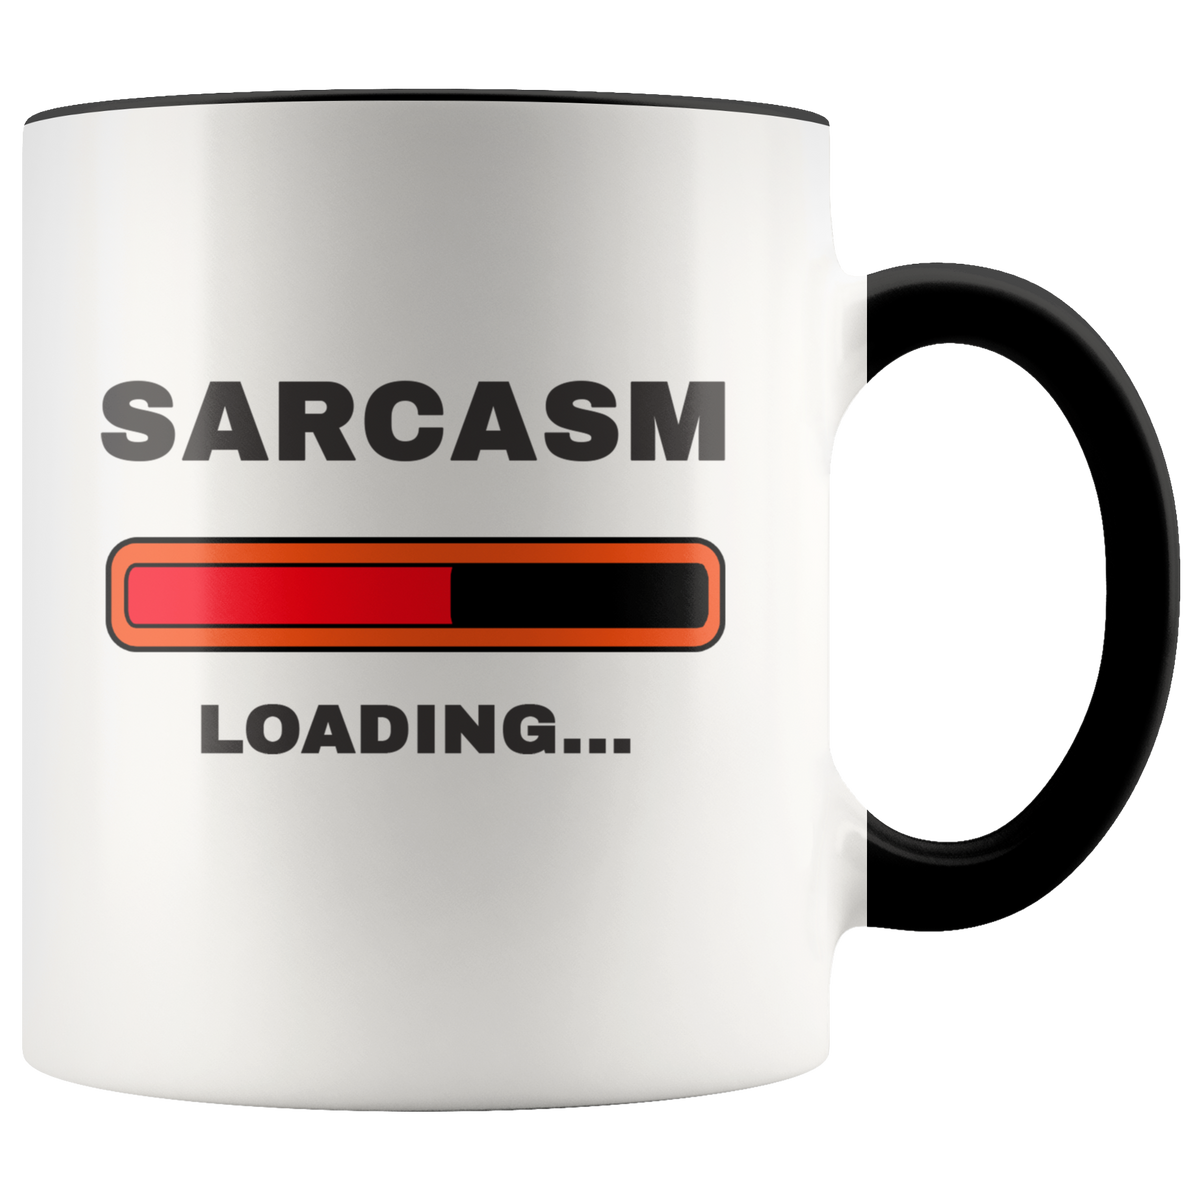 Sarcasm Loading Mug, Funny Sarcasm Gift For Sarcastic Friends, Coworker Accent Coffee Mug 11oz (black)